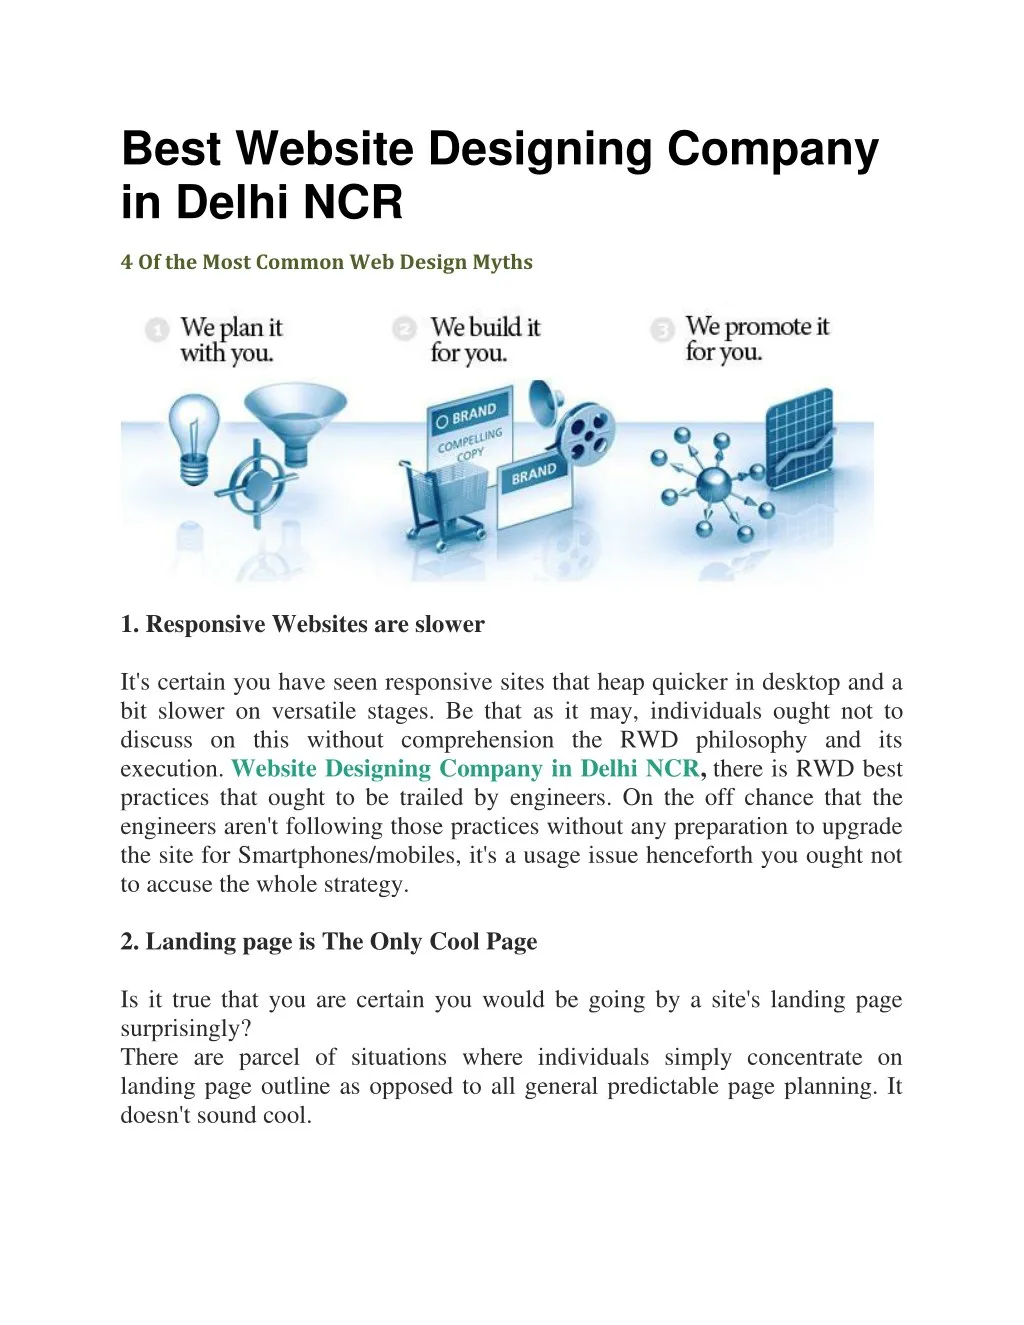 best website designing company in delhi ncr